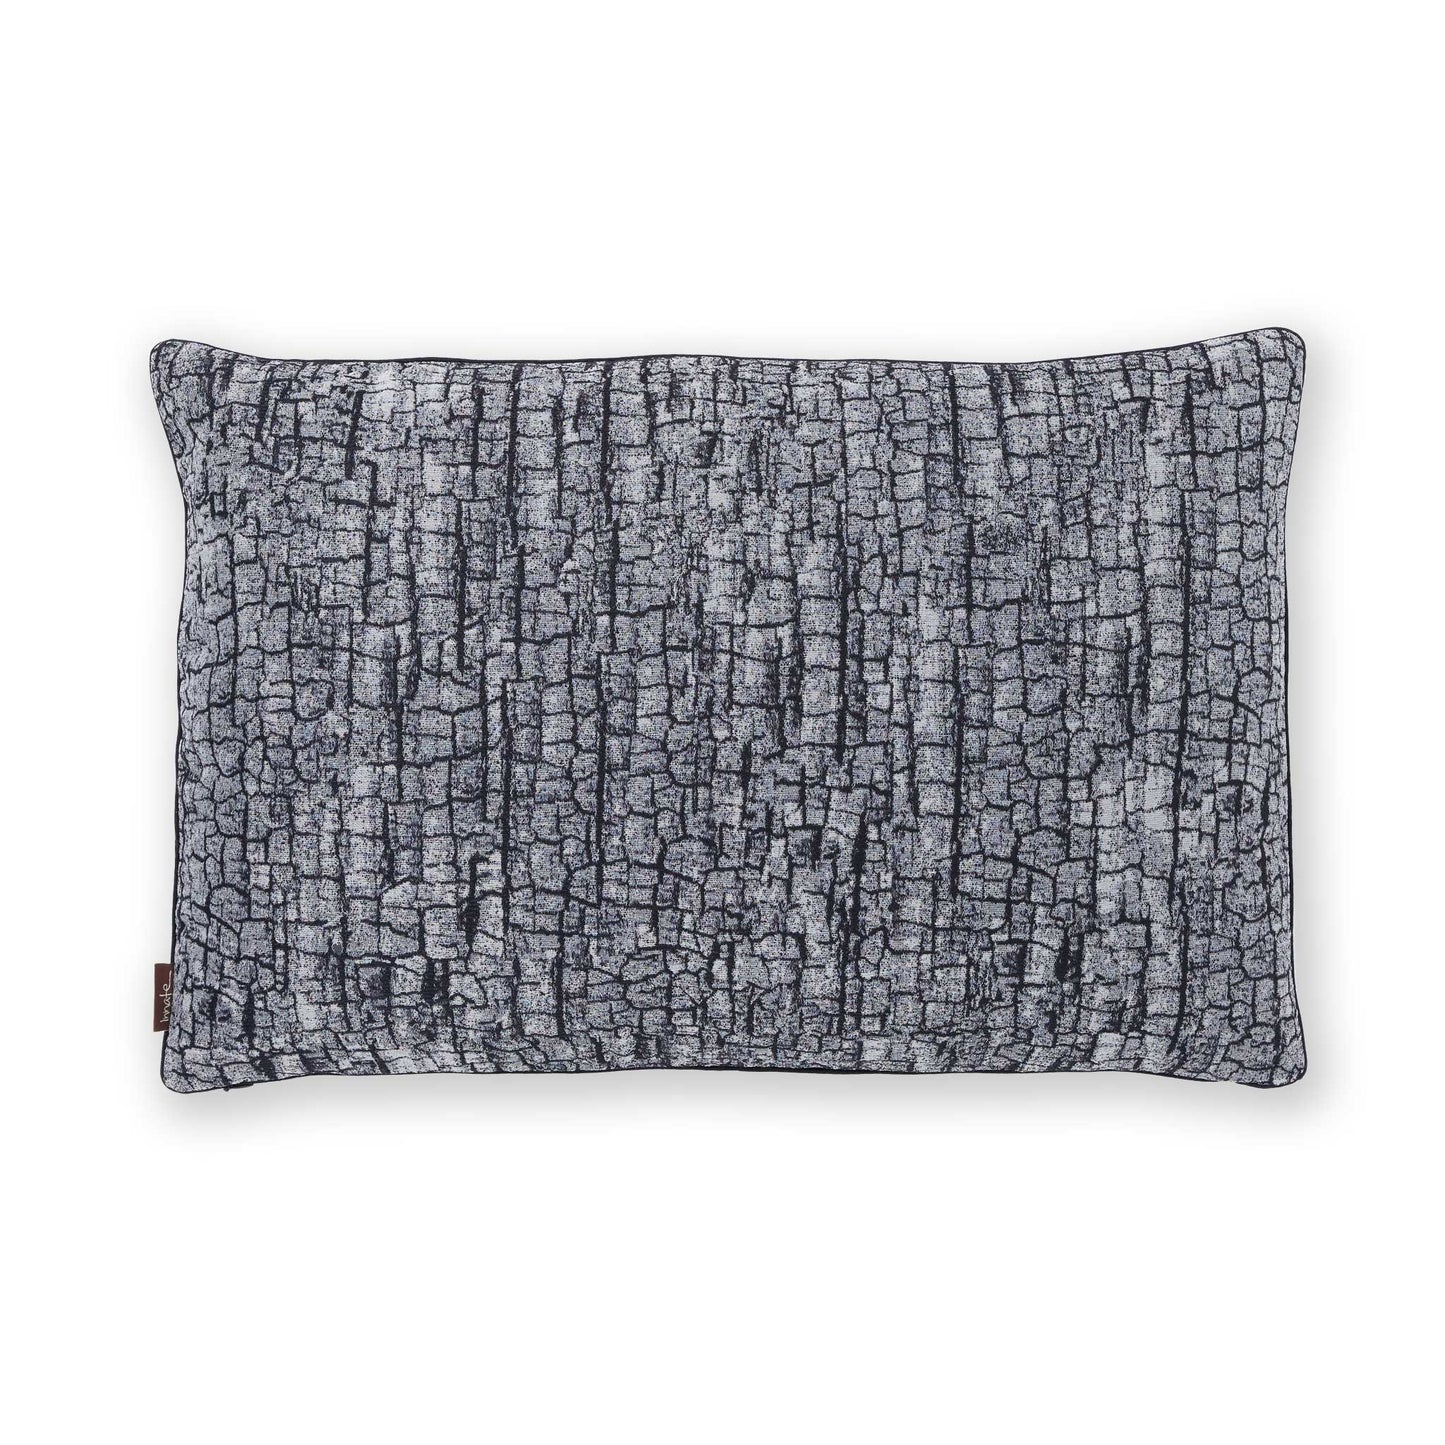 Bark cushion in Ash – Innate Collection